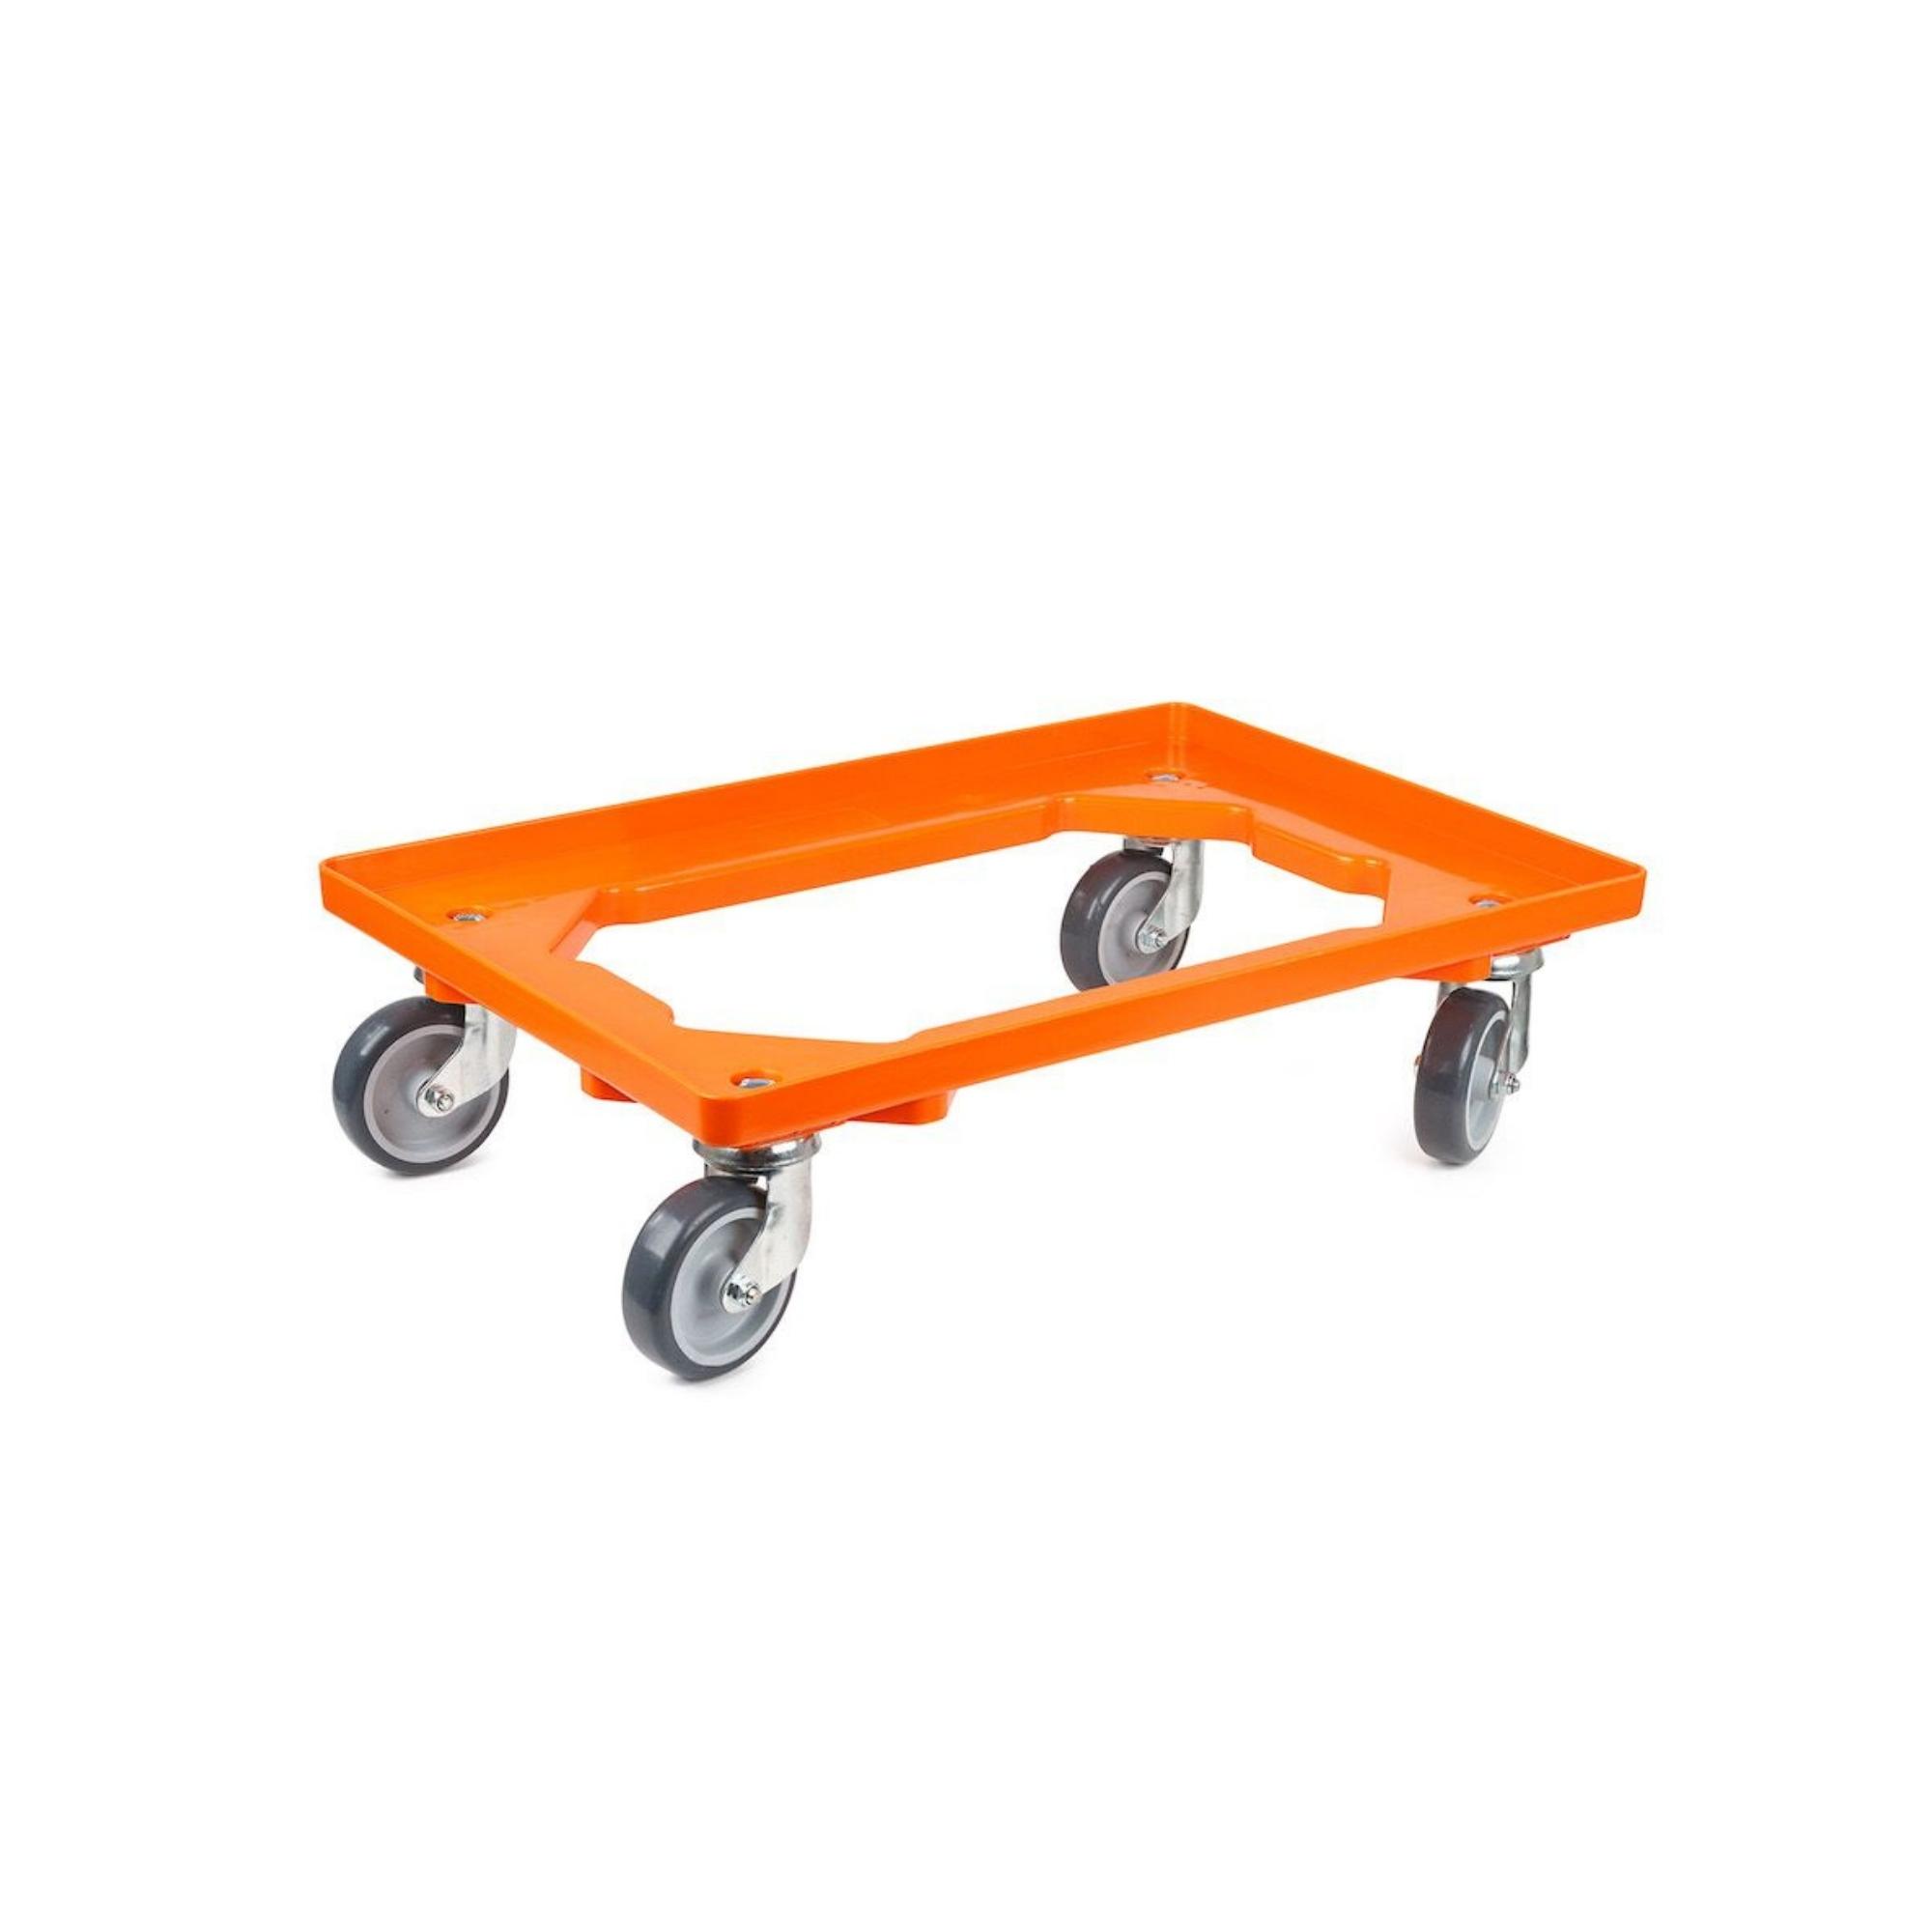 SparSet 6x Transportroller für Euroboxen 60x40cm mit Gummiräder orange | Offenes Deck | 2 Lenkrollen & 2 Bremsrollen | Traglast 300kg | Kistenroller Logistikroller Rollwagen Profi-Fahrgestell